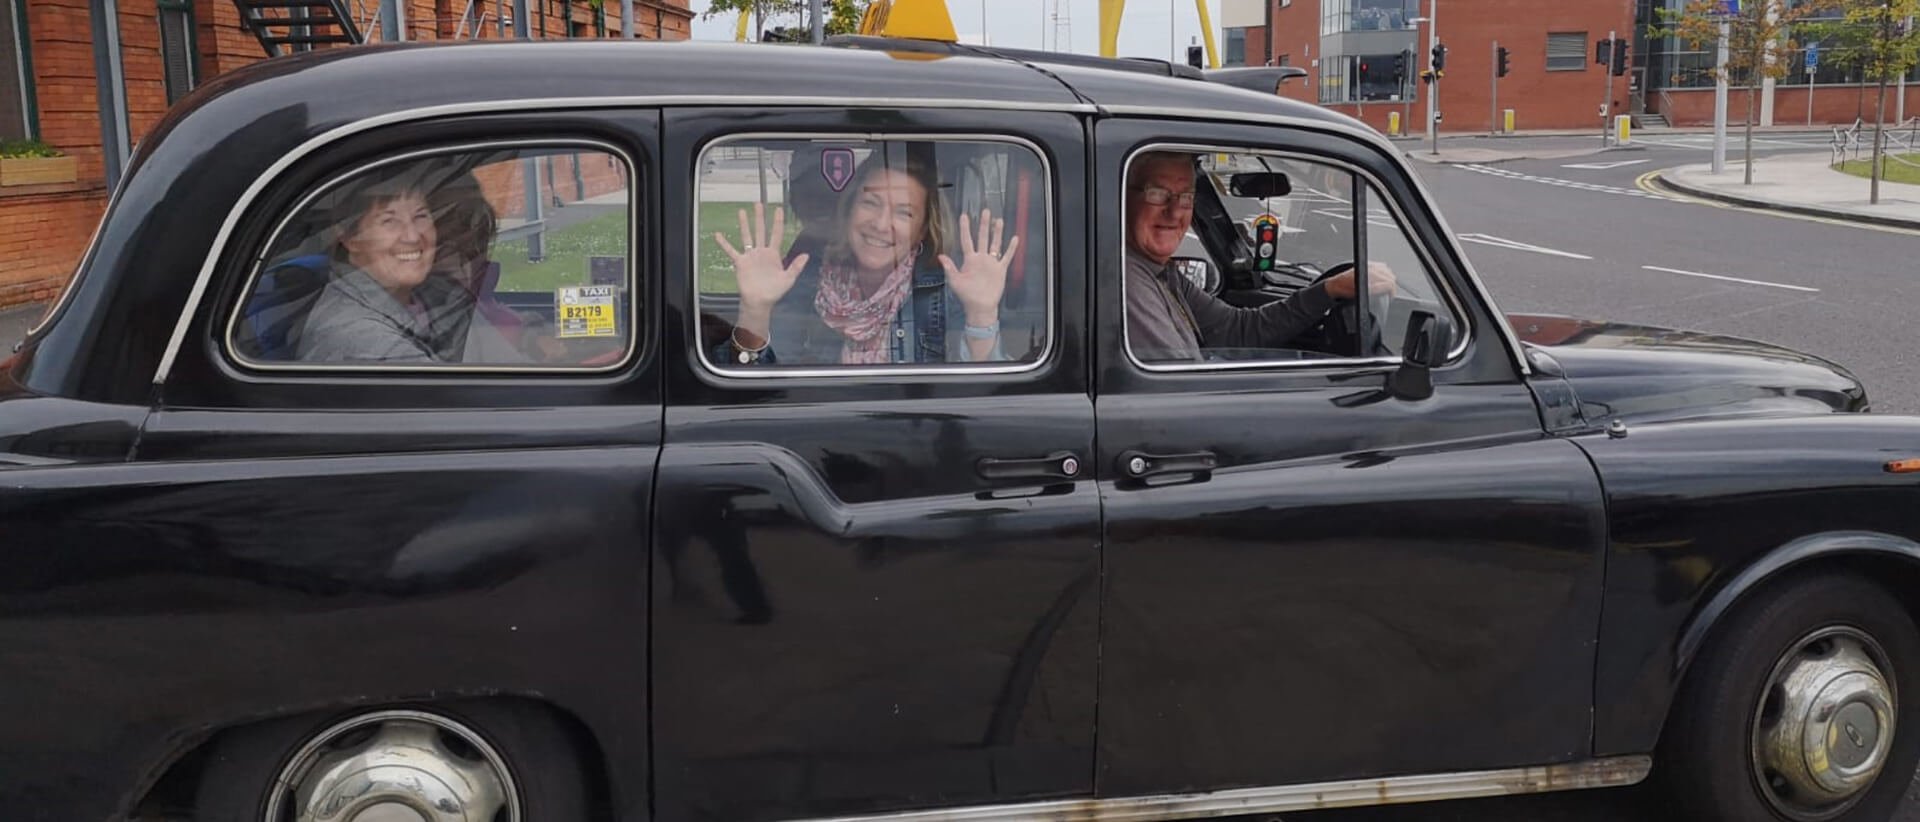 Vagabond Tour group setting off on a Black Cab tour of Belfast, Northern Ireland